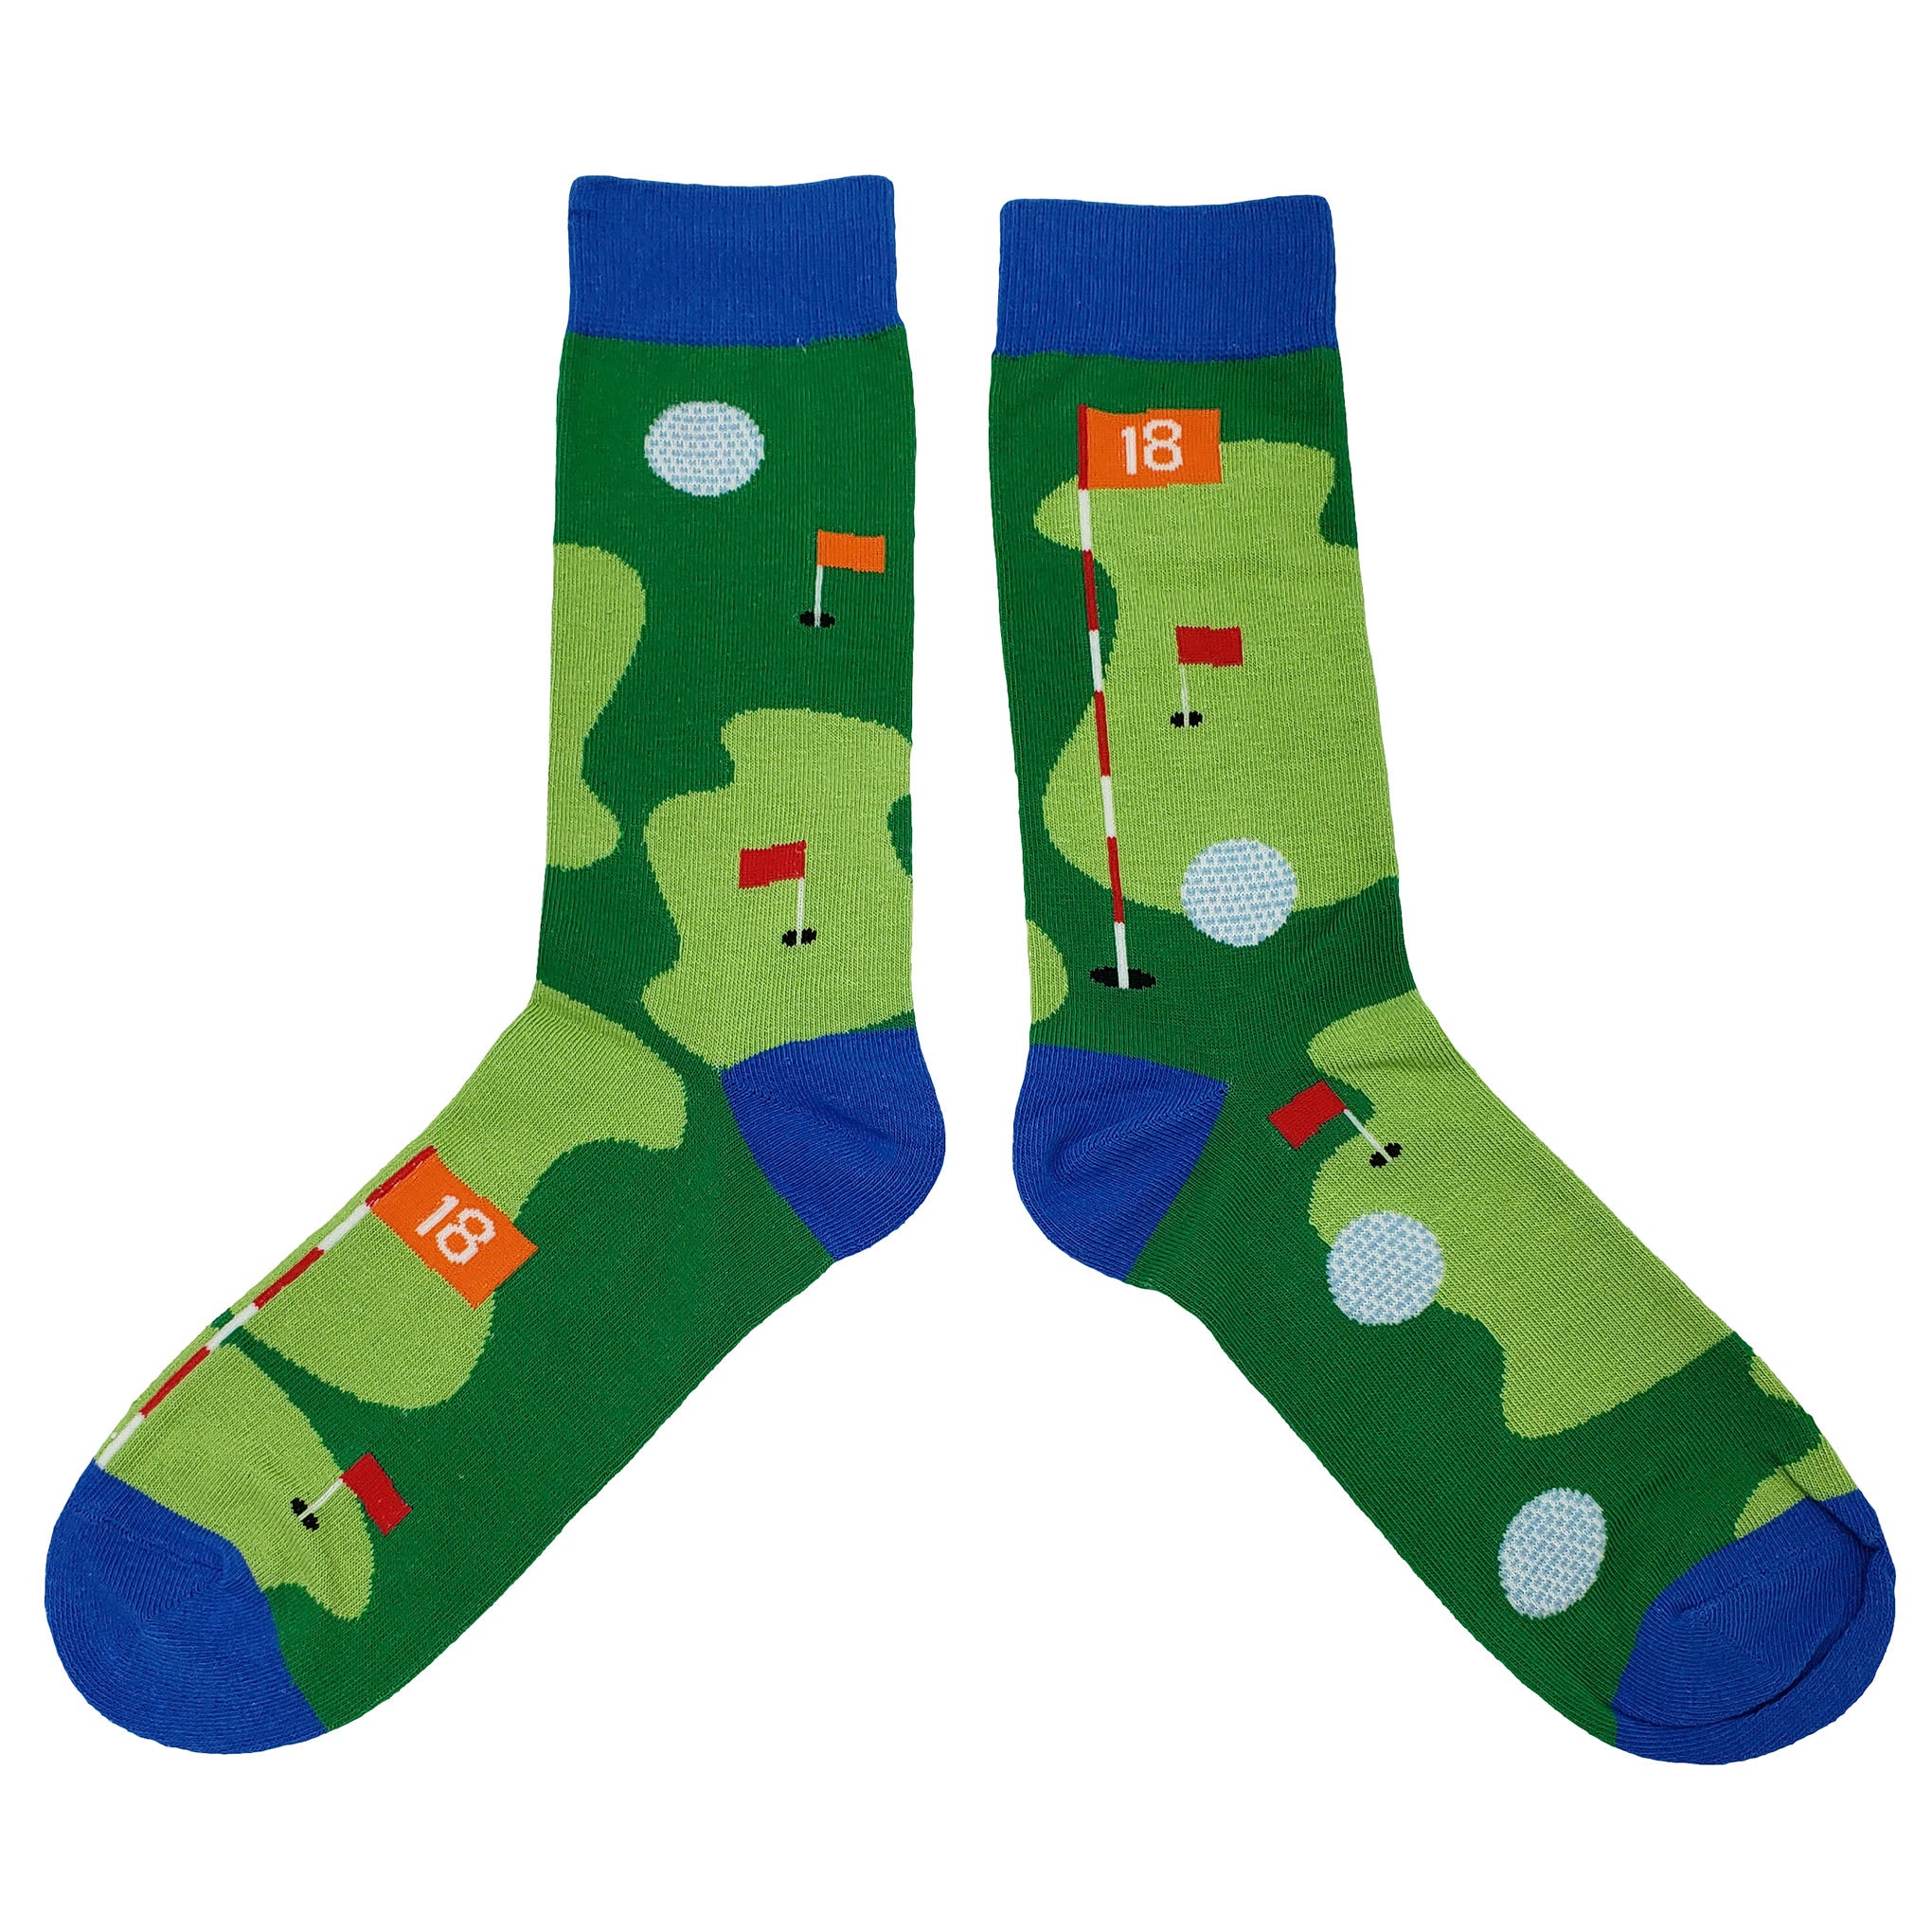 Golf Hole 18 Socks - Fun and Crazy Socks at Sockfly.com